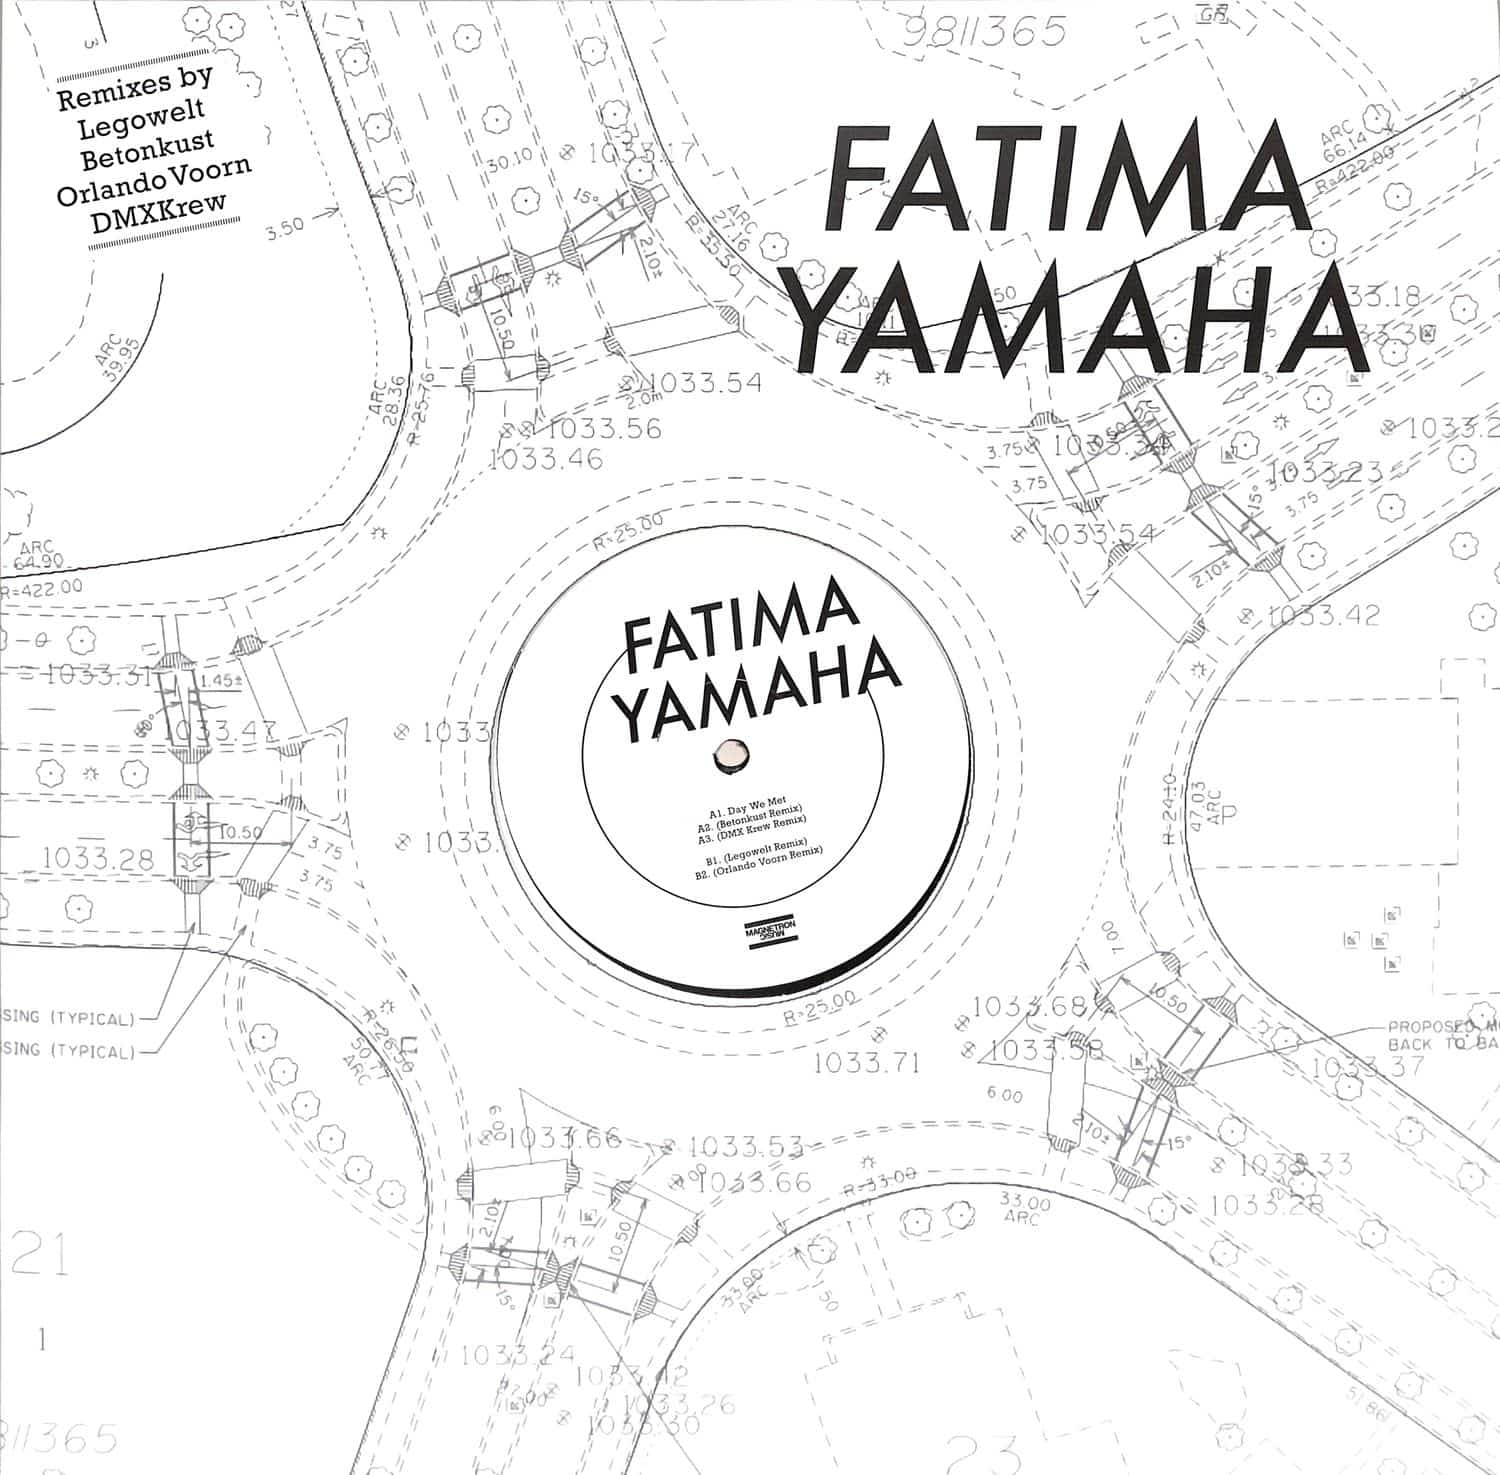 Fatima Yamaha - DAY WE MET REMIXES